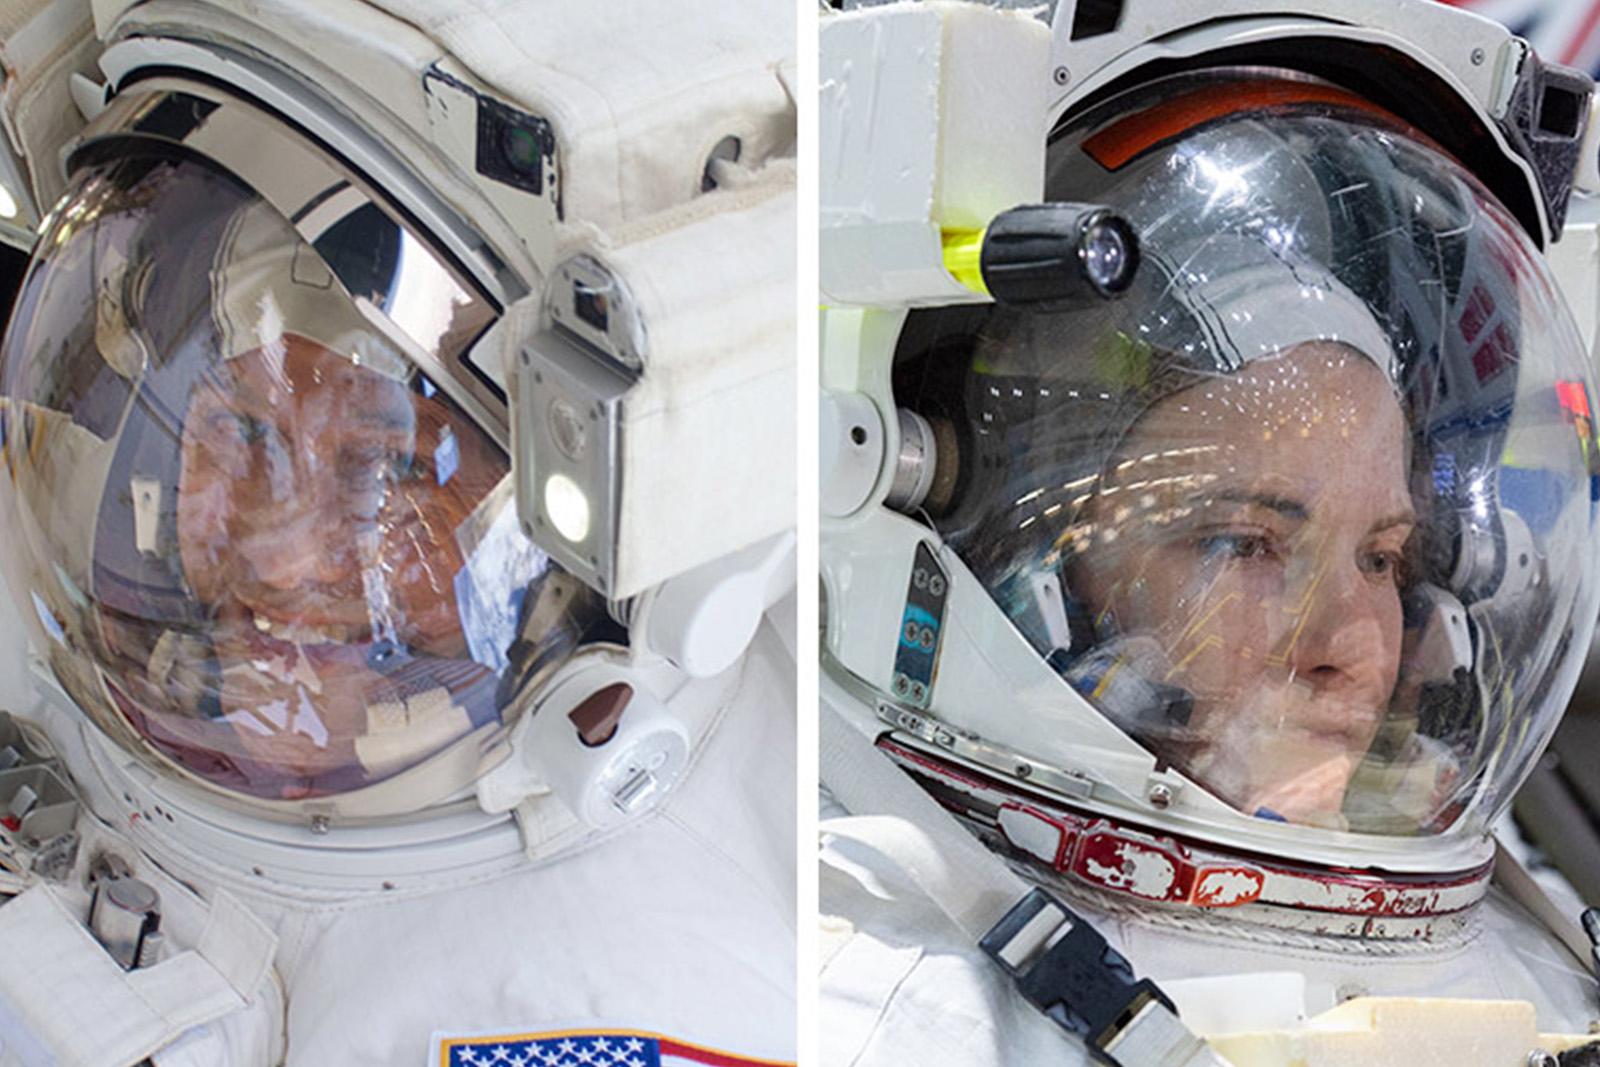 Spacewalkers (from left) Thomas Marshburn and Kayla Barron 